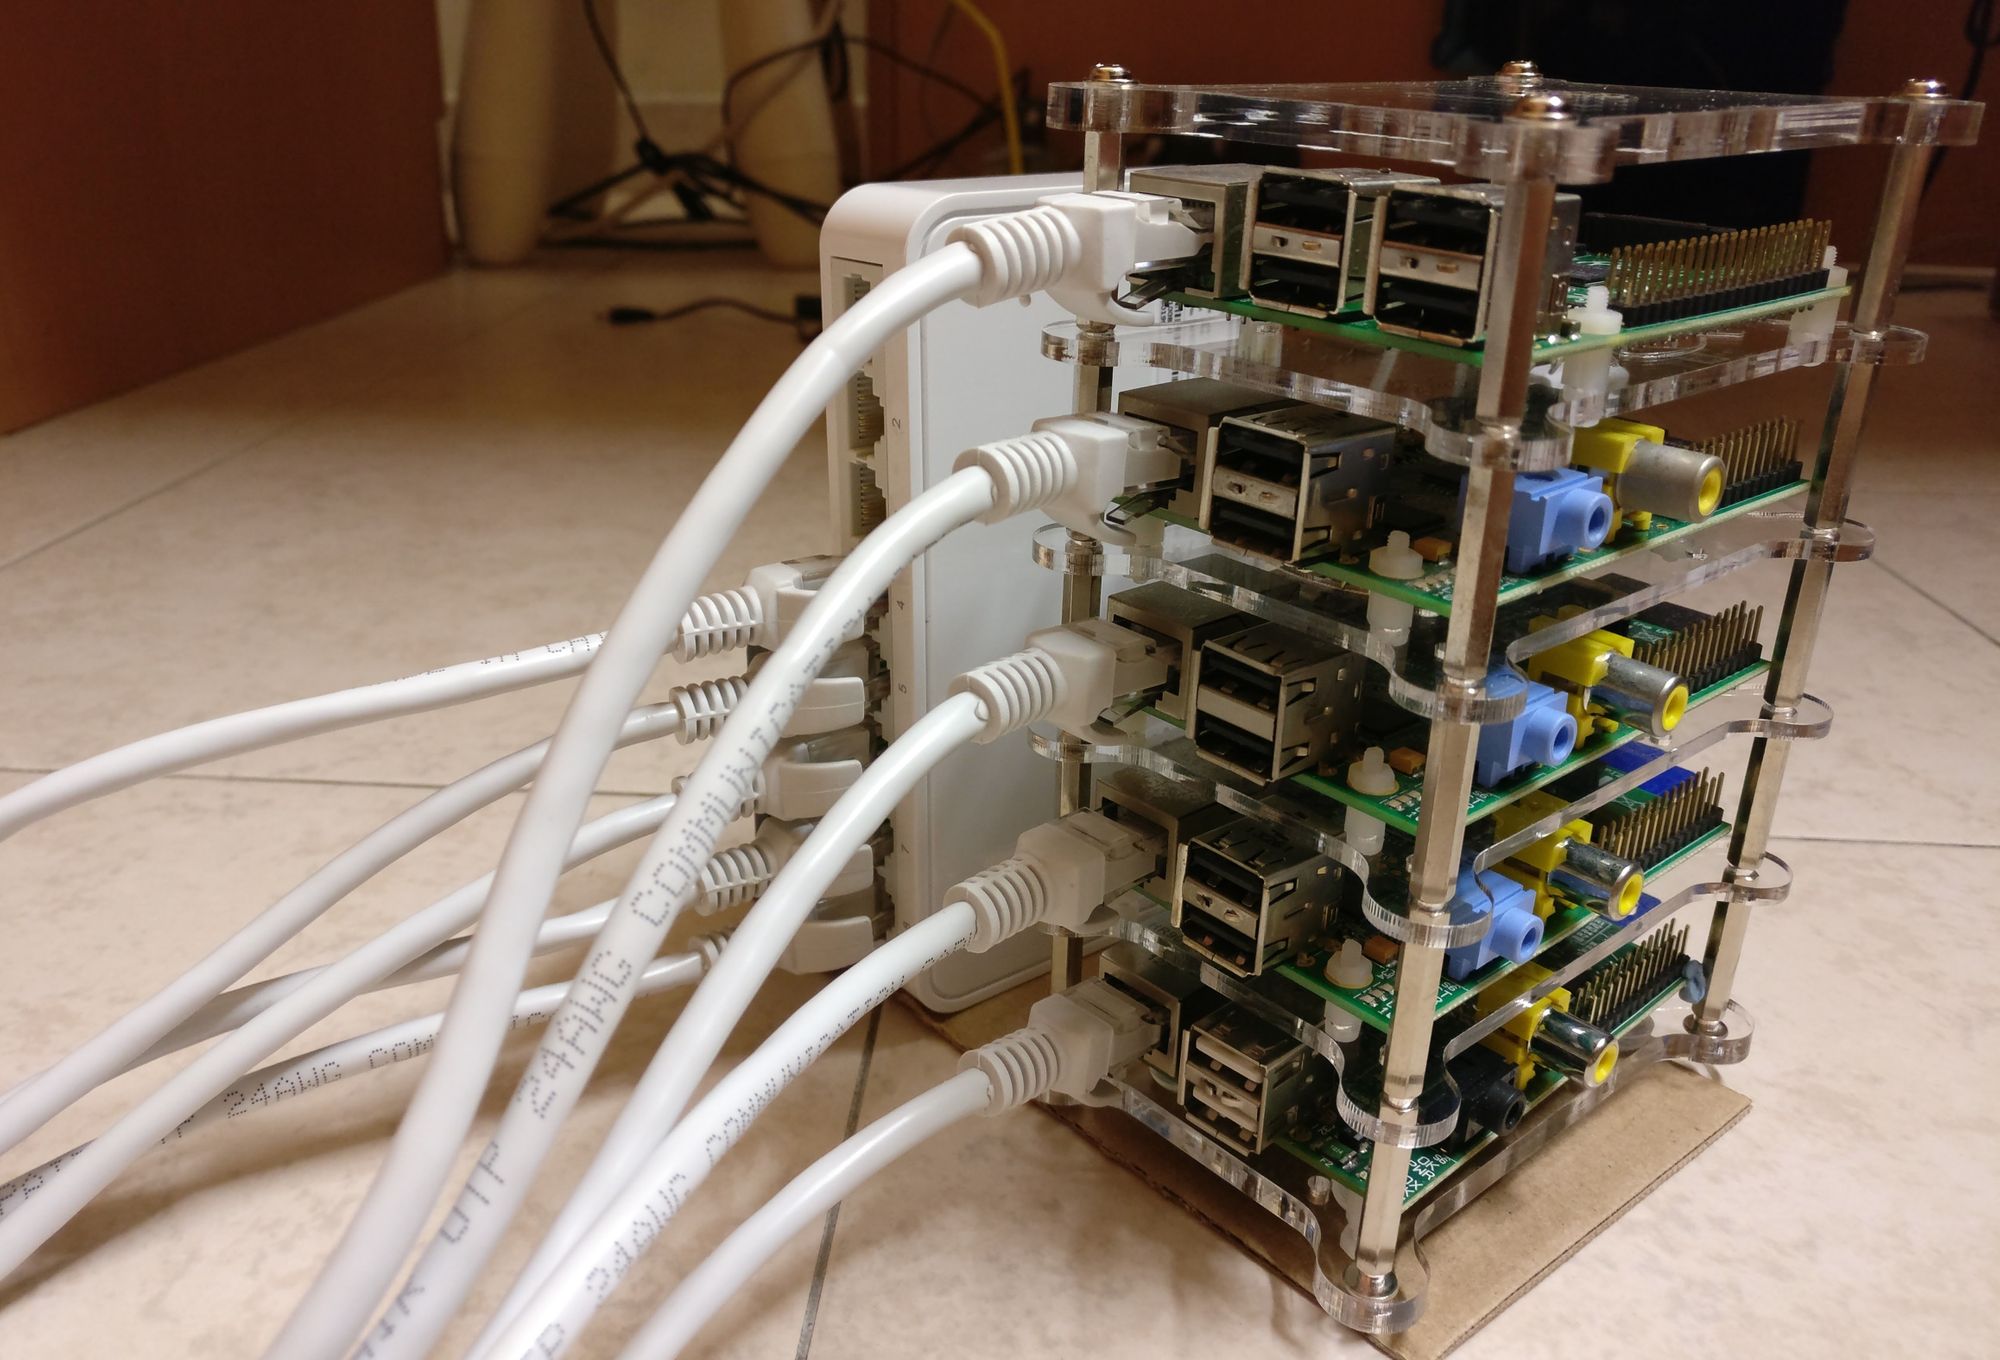 How I Built a Raspberry Pi Cluster for Cheap